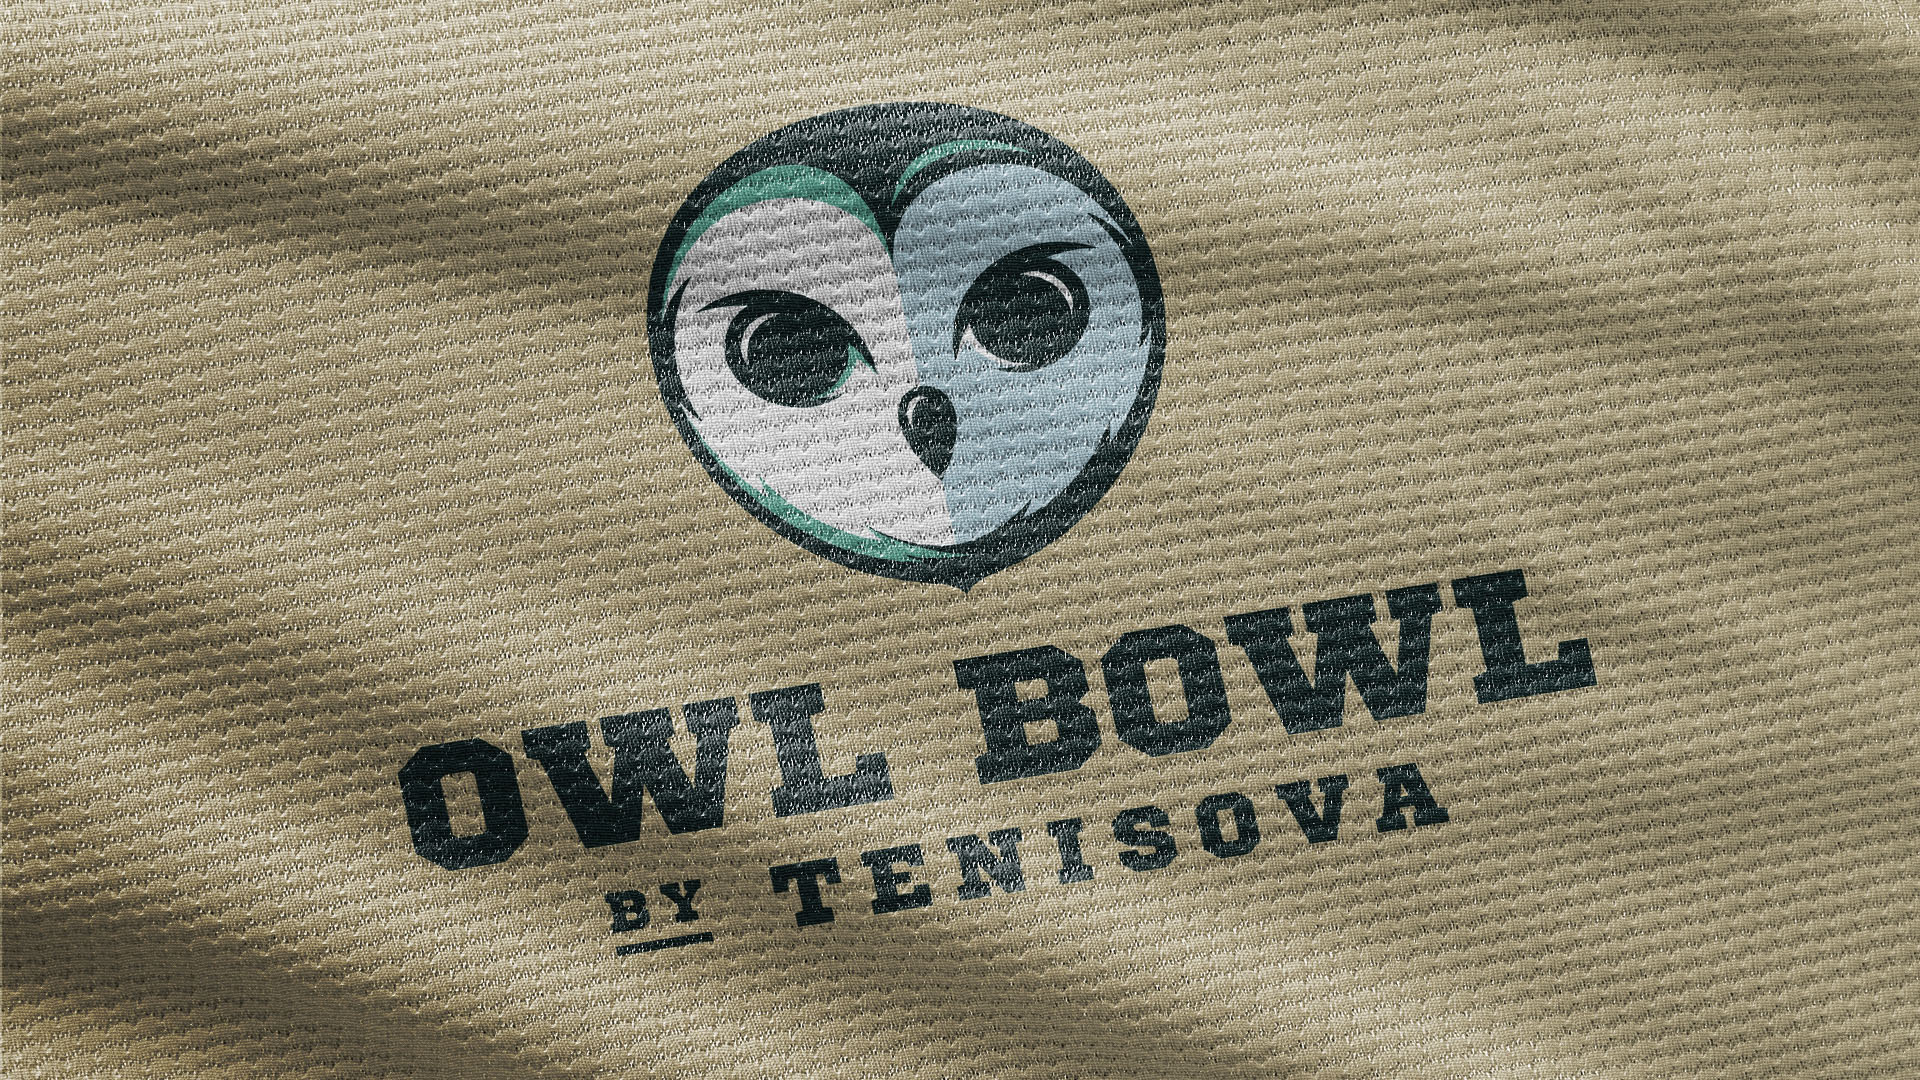 Owl Bowl